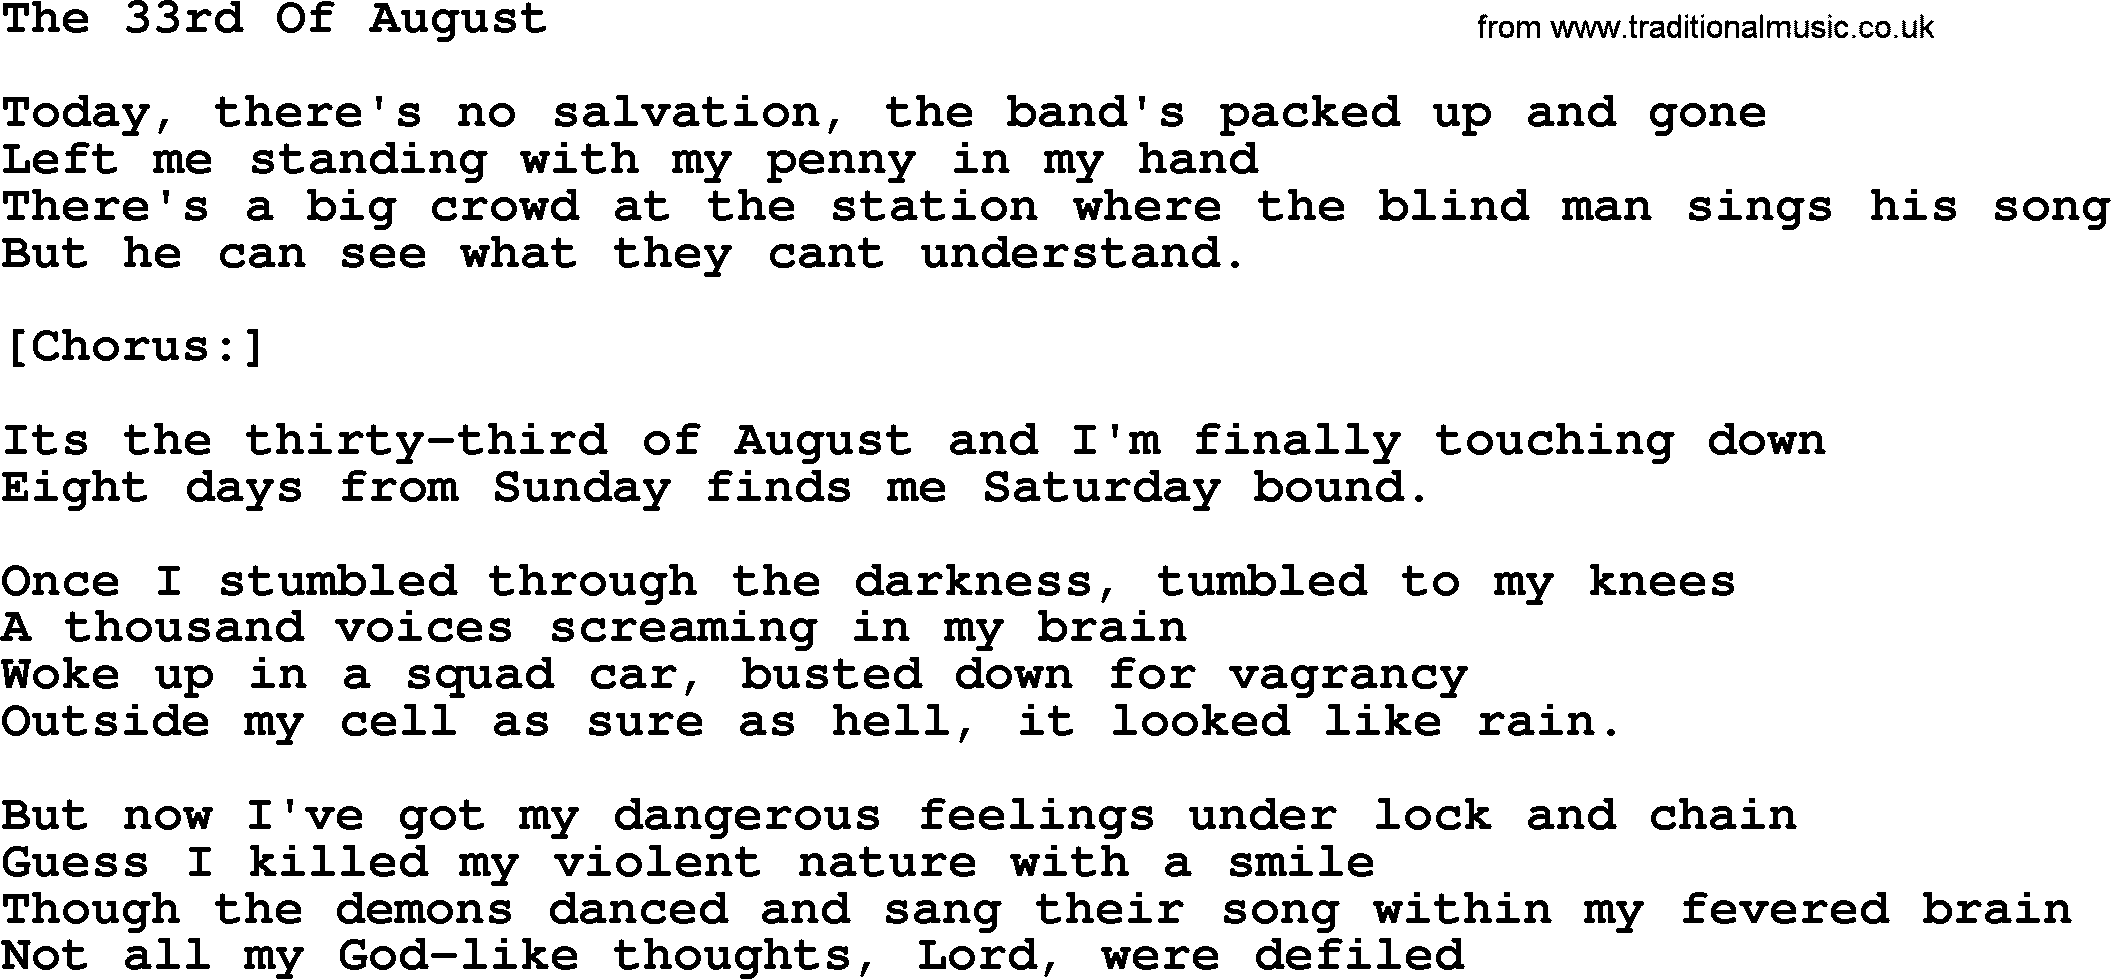 Joan Baez song The 33rd Of August, lyrics